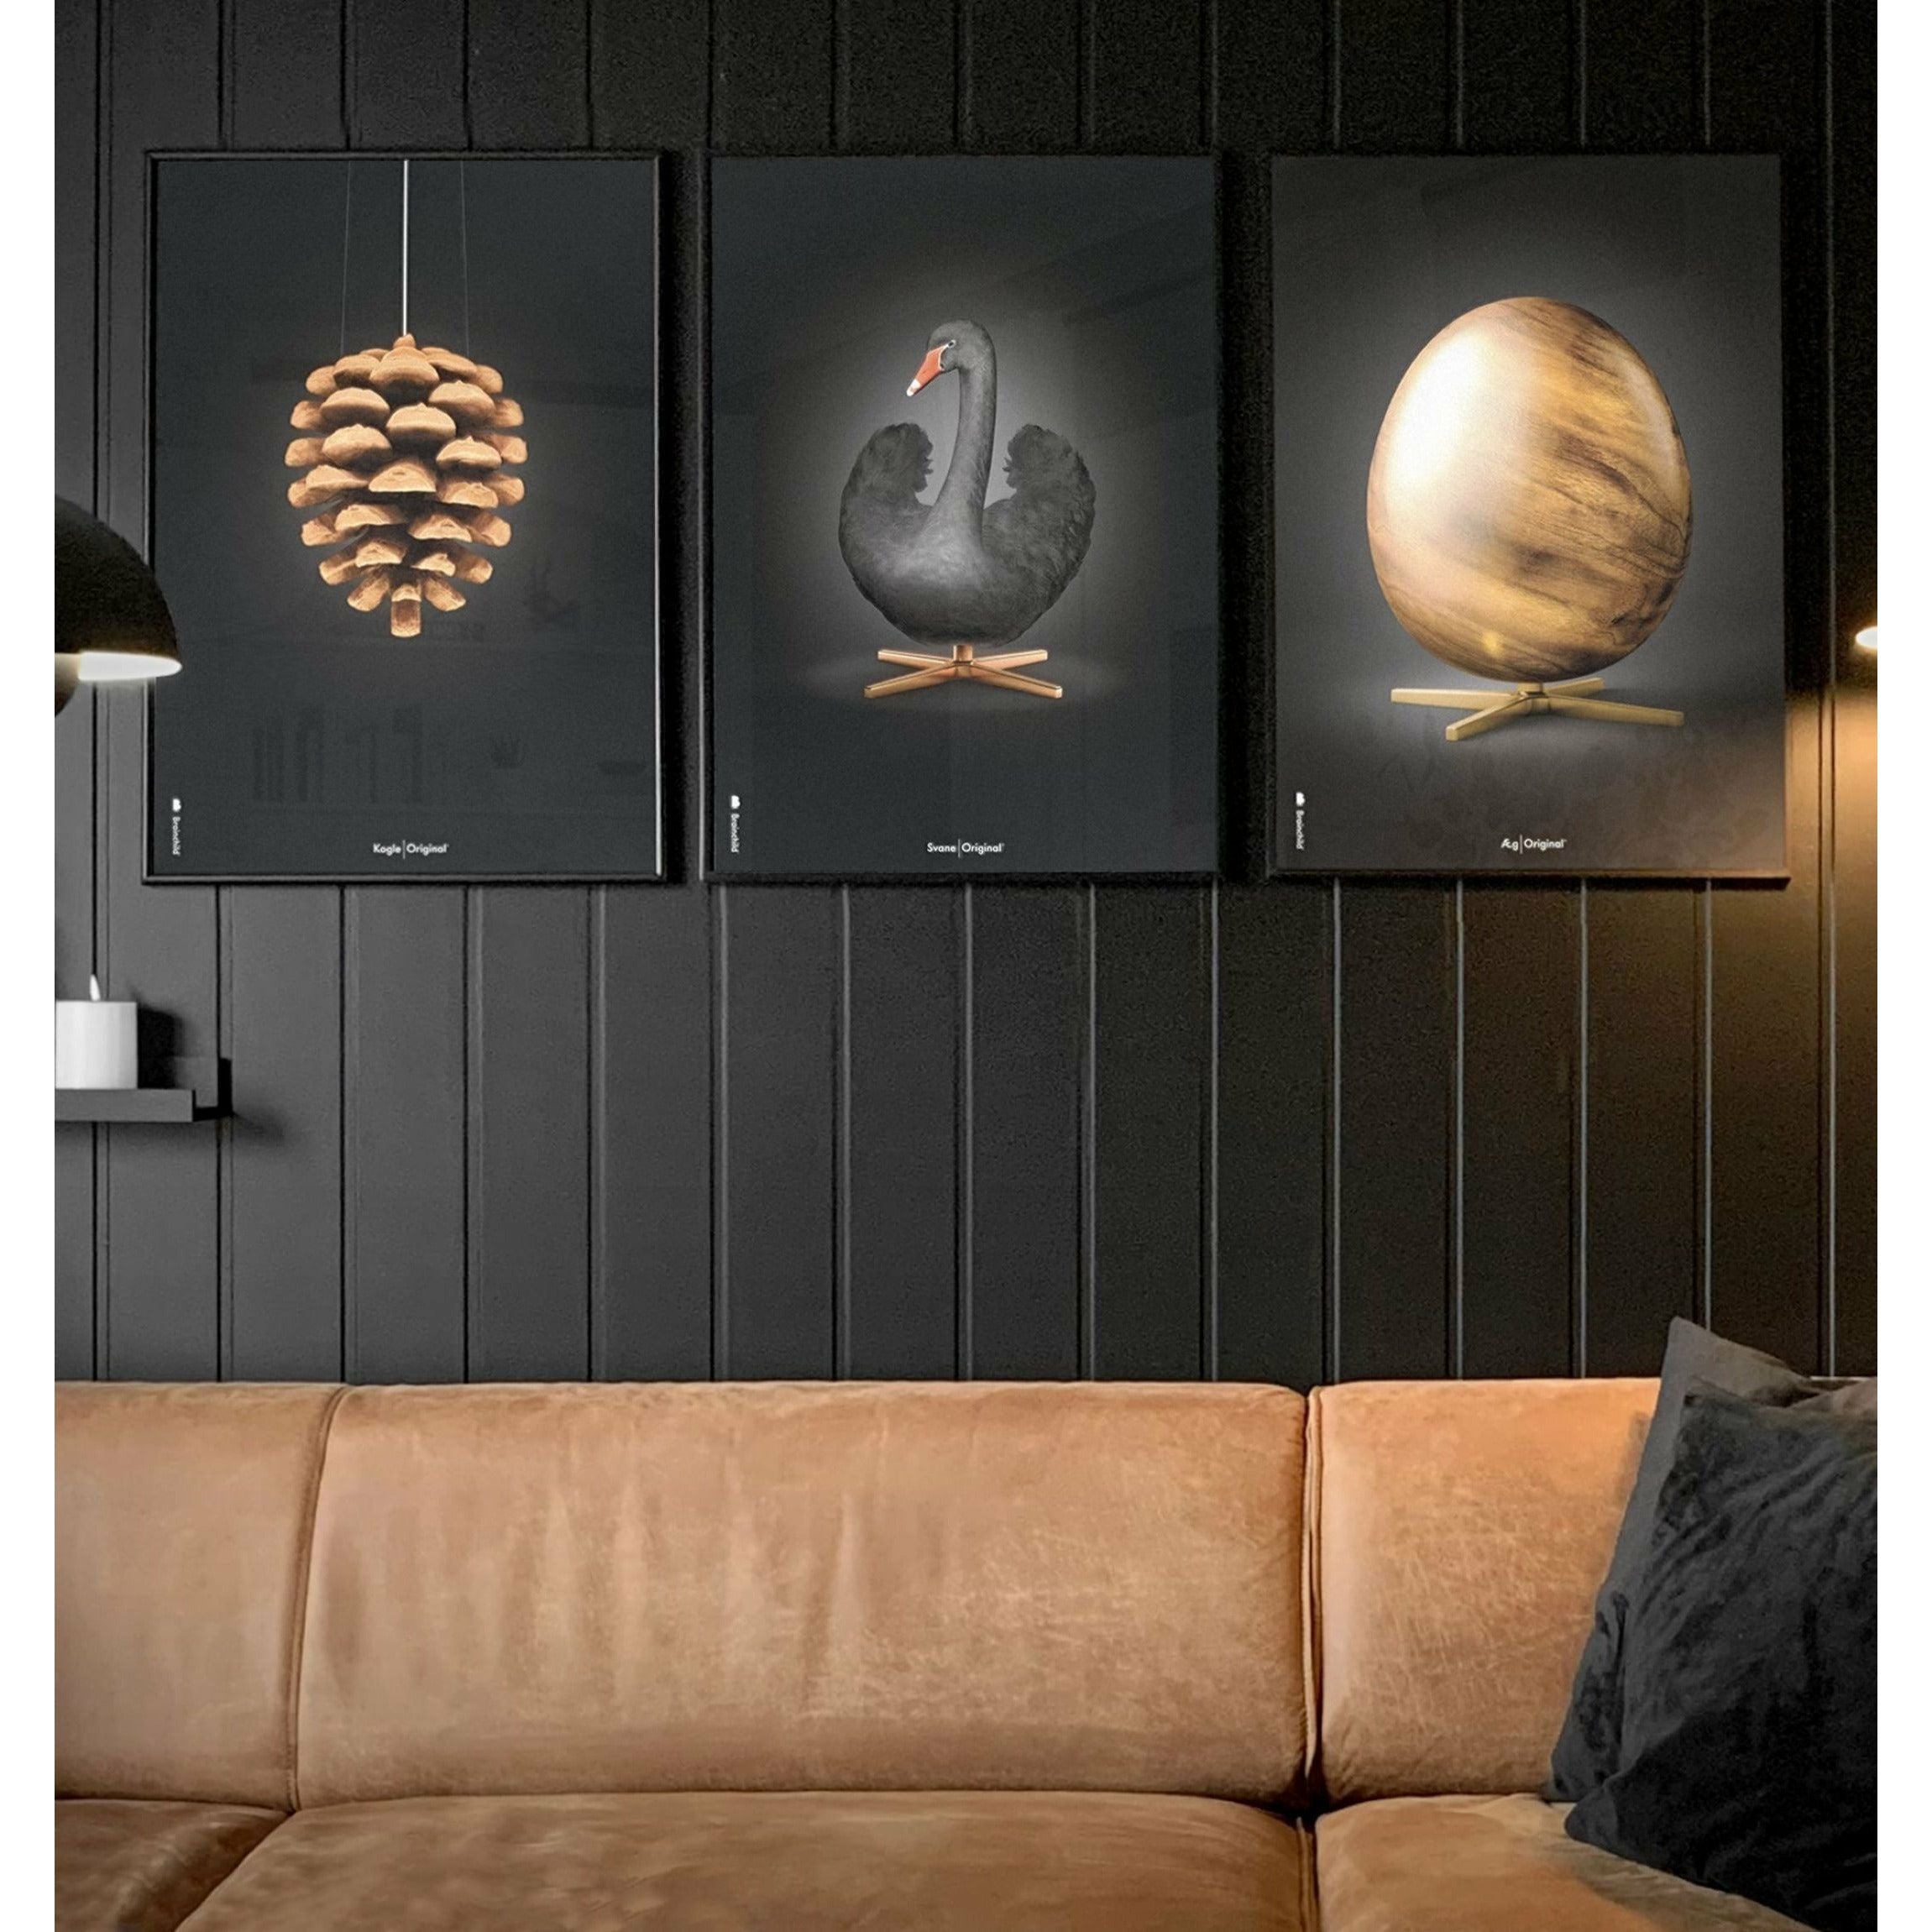 Brainchild Swan Classic Poster uten ramme 30 x40 cm, svart/svart bakgrunn